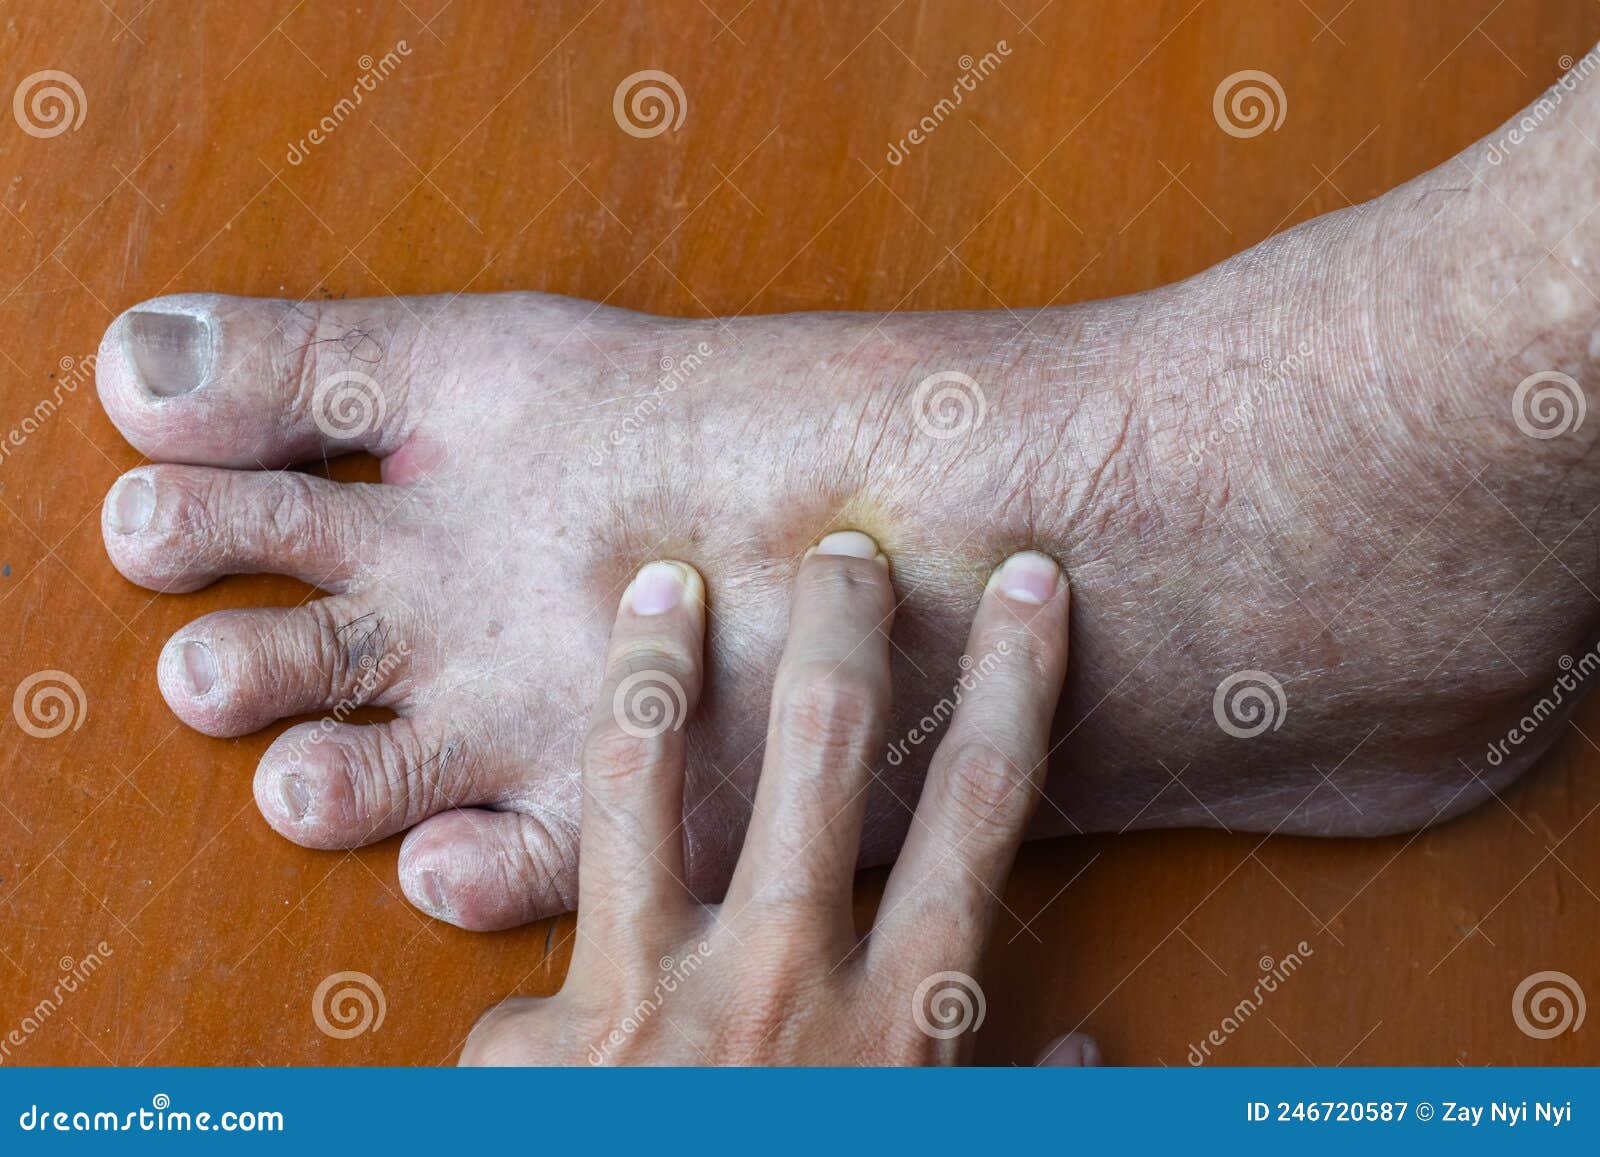 Pitting Edema Of Lower Limb Swollen Leg Of Asian Man Stock Image